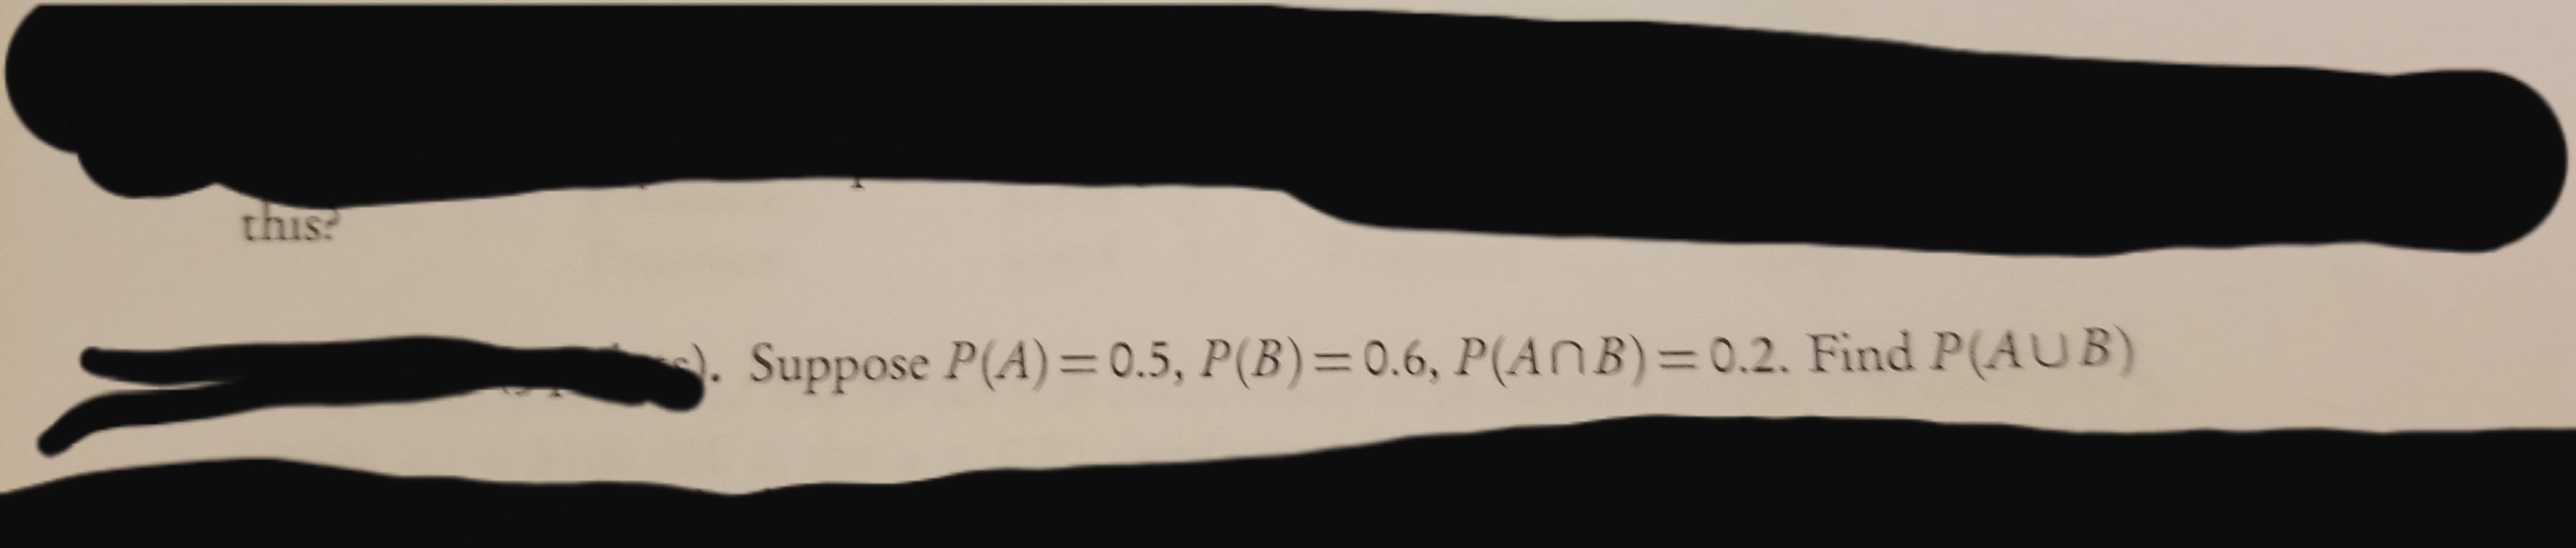 this?
Suppose P(A)= 0.5, P(B)=0.6, P(ANB)=0.2. Find P(AUB)
